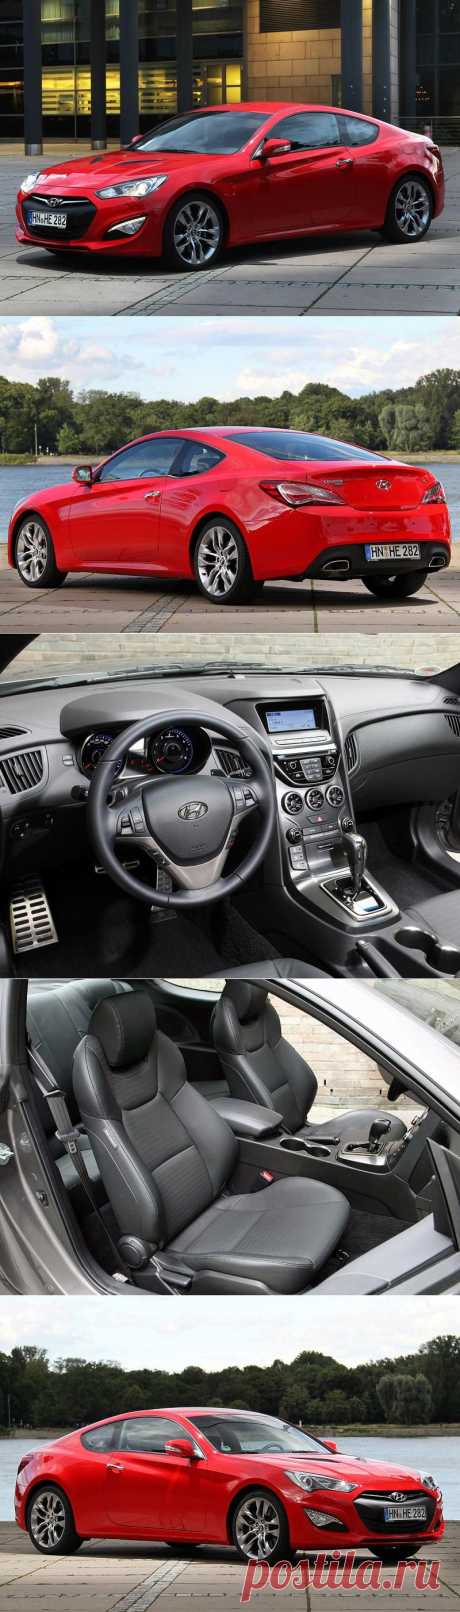 2012 Hyundai Genesis Coupe 3.8 V6 — Воротила